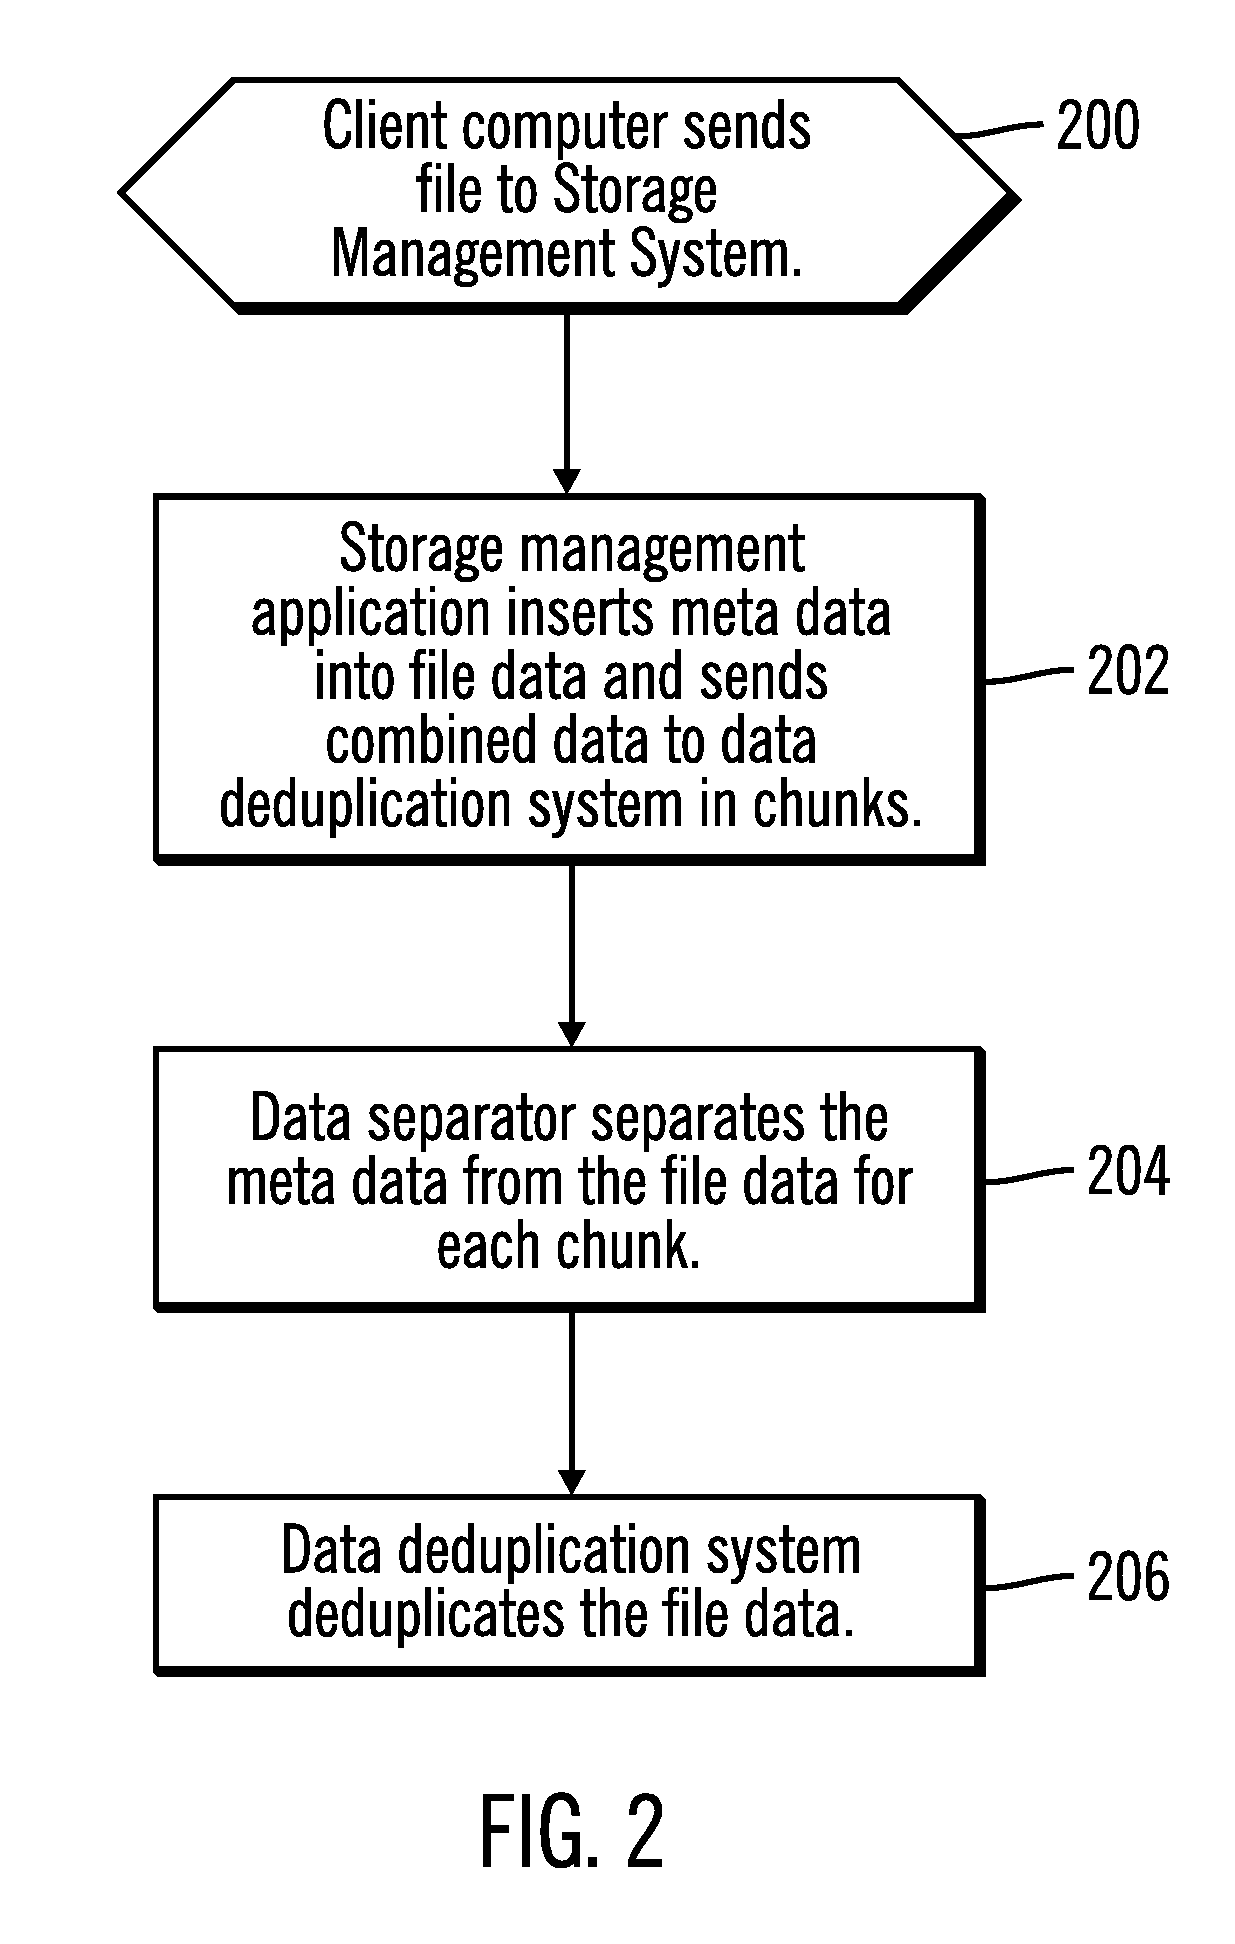 Data deduplication by separating data from meta data